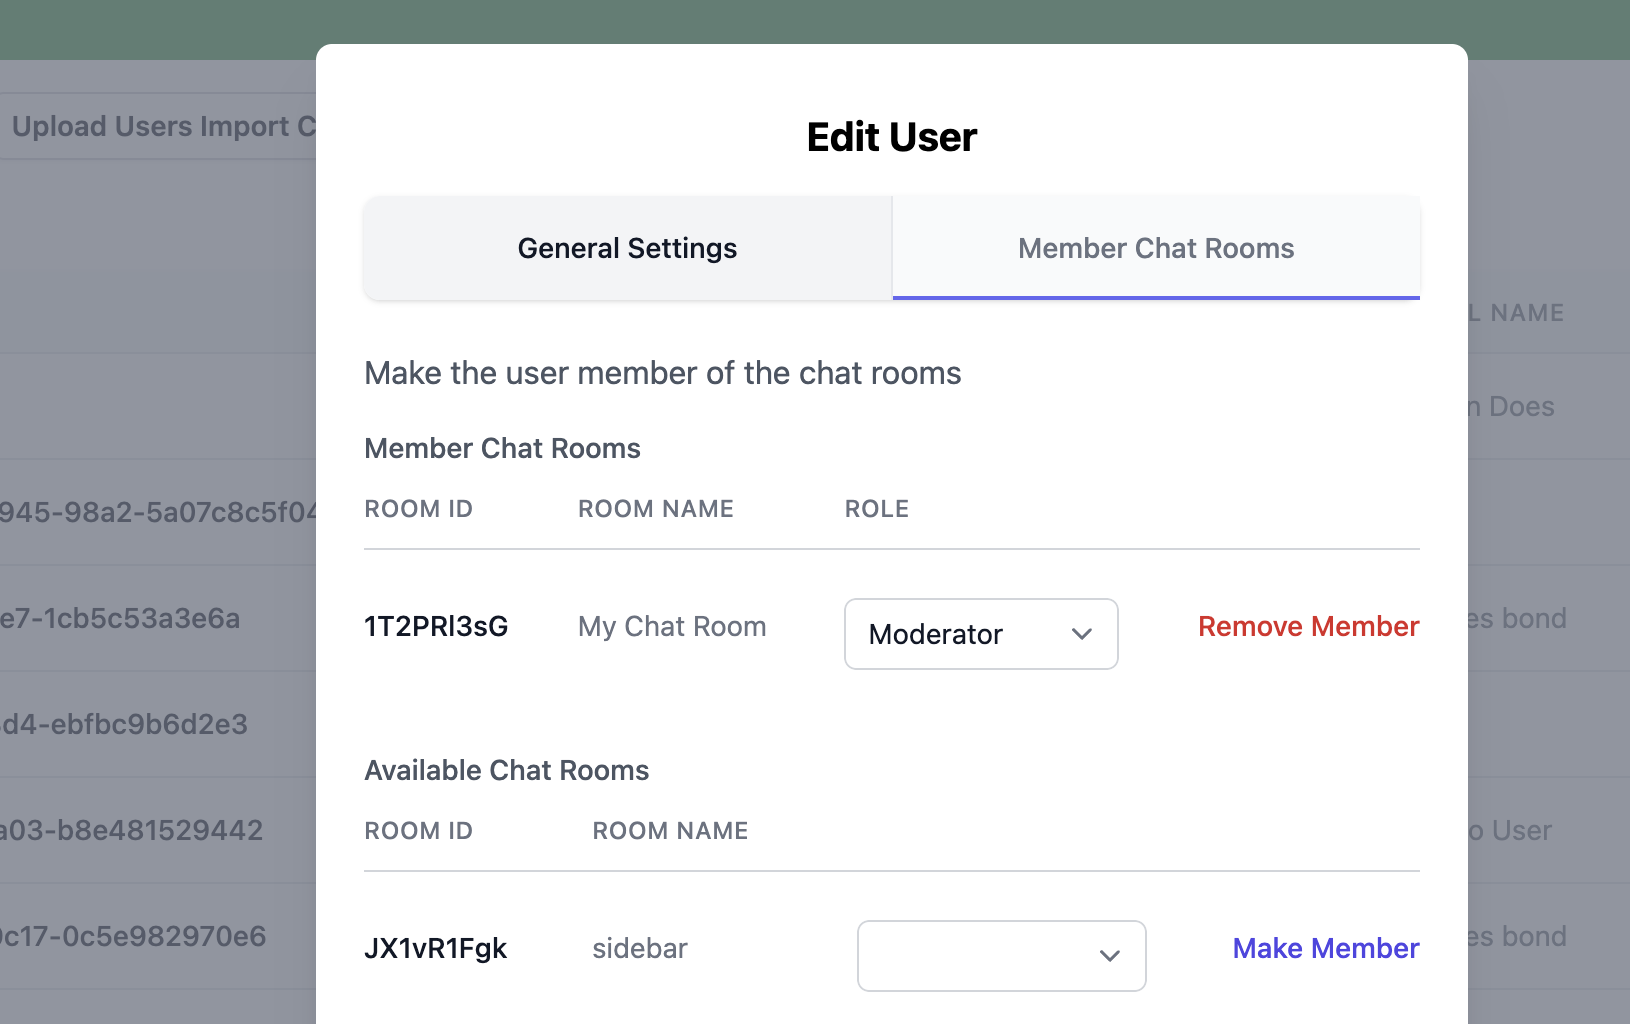 Member Chat Room Moderator